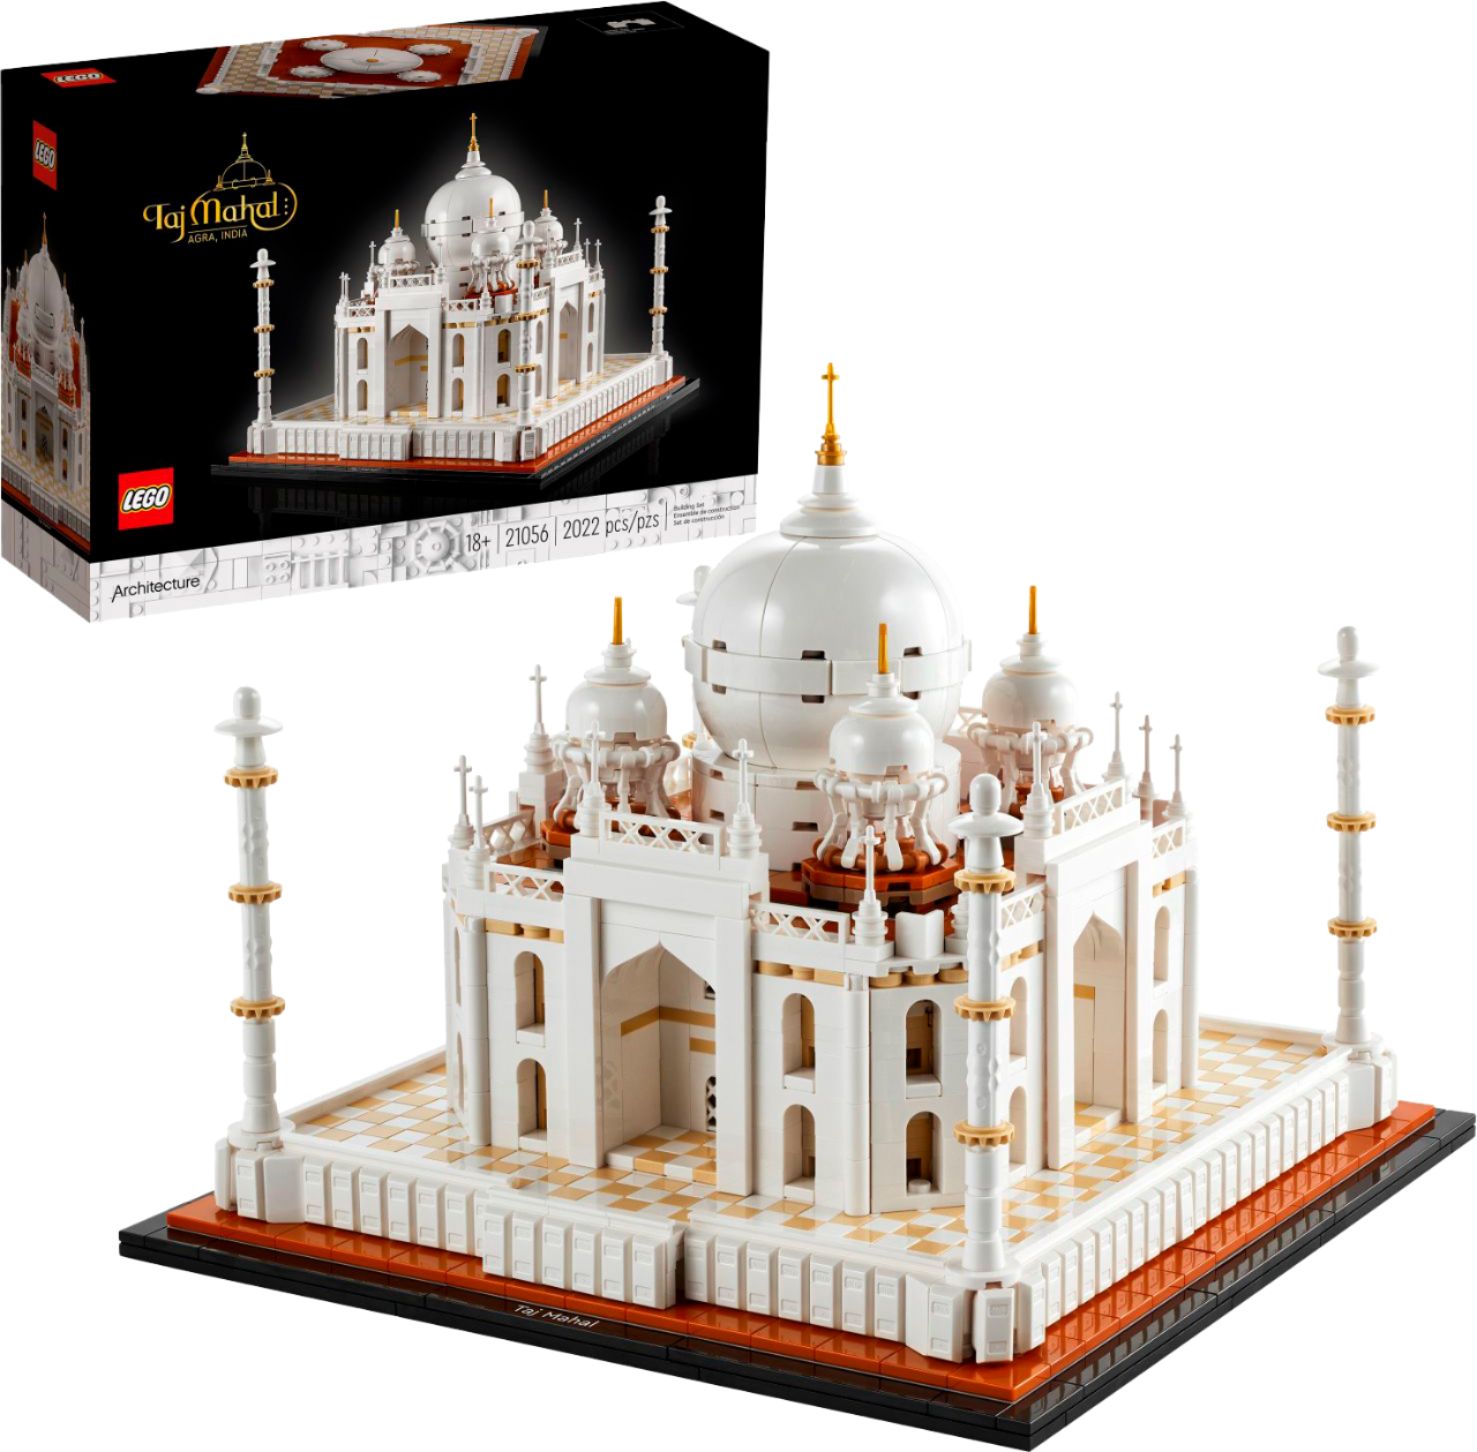 Lego Taj Mahal Architecture (21056)